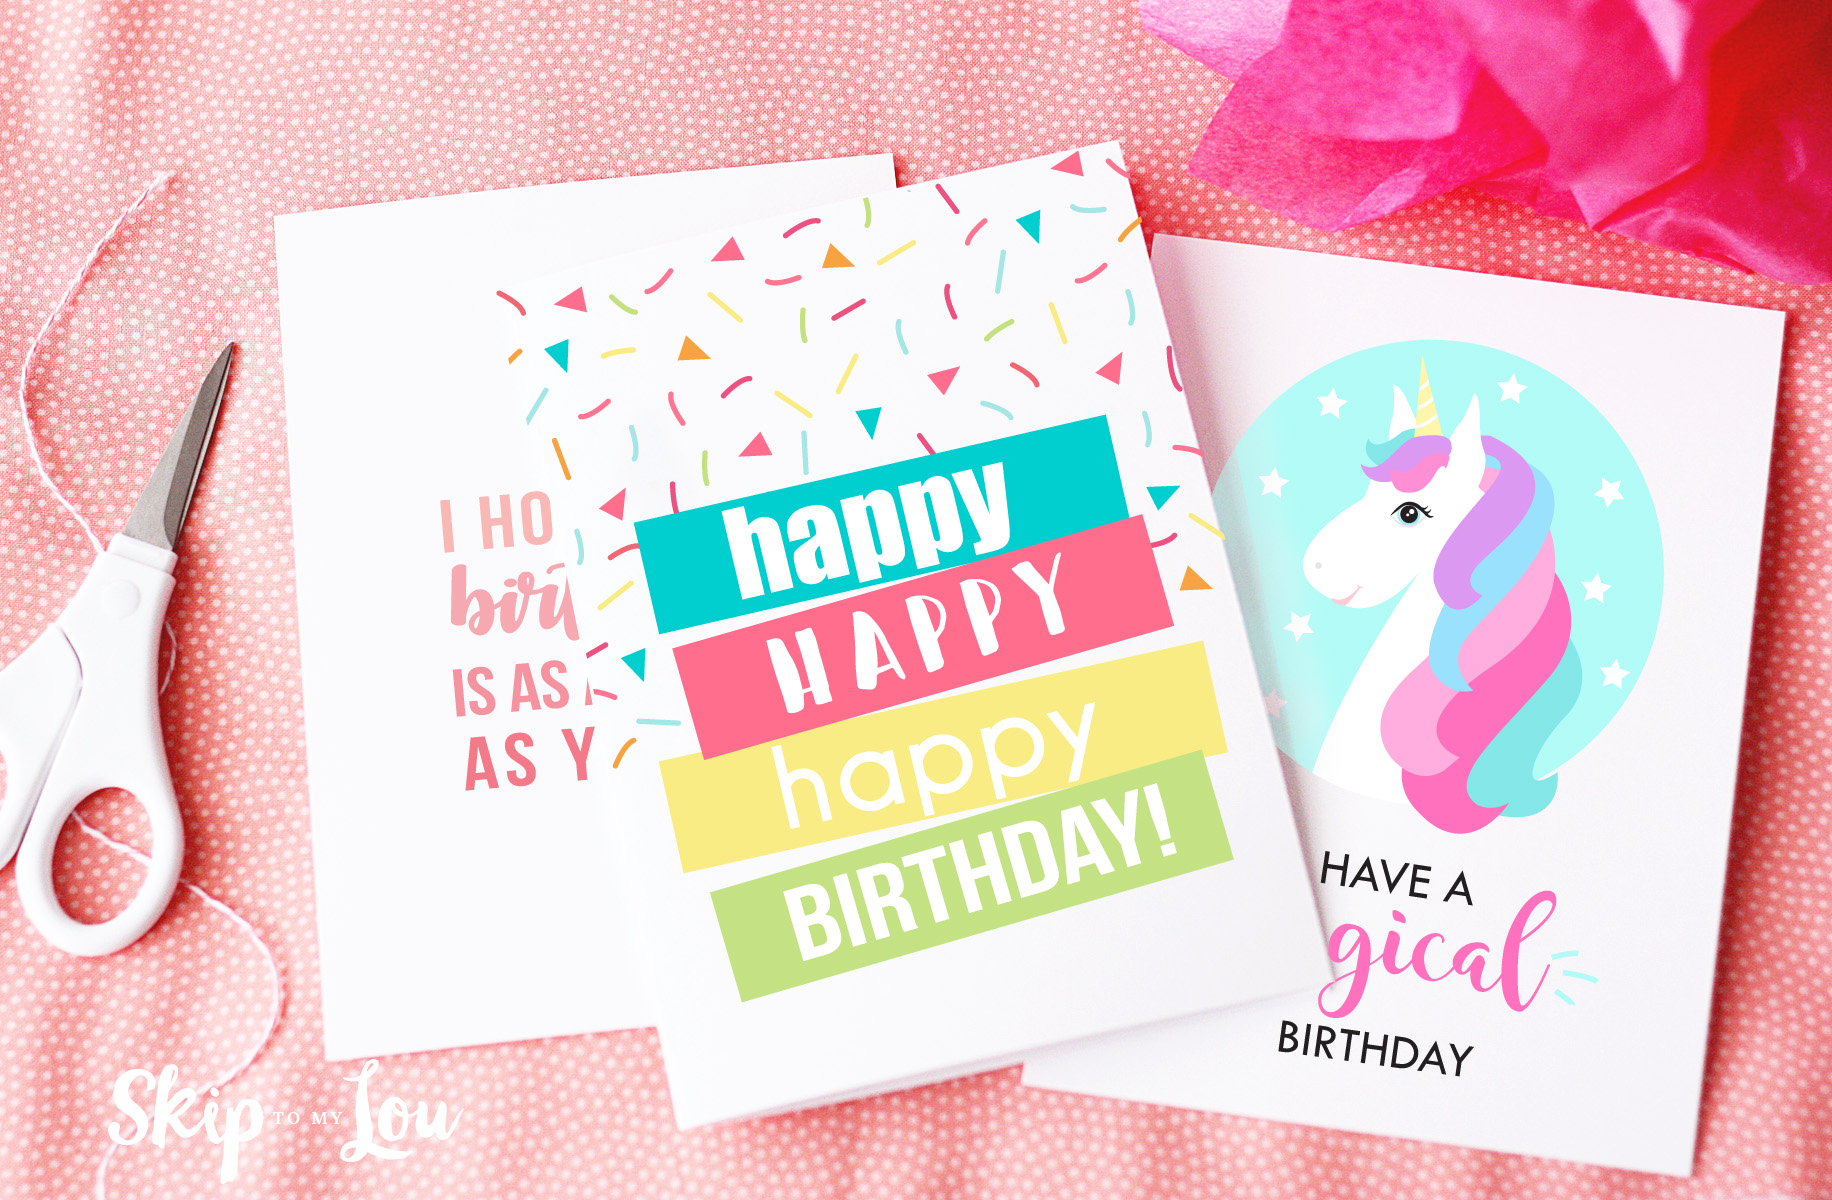 Free Printable Birthday Cards | Skip To My Lou - Free Printable Birthday Cards For Adults